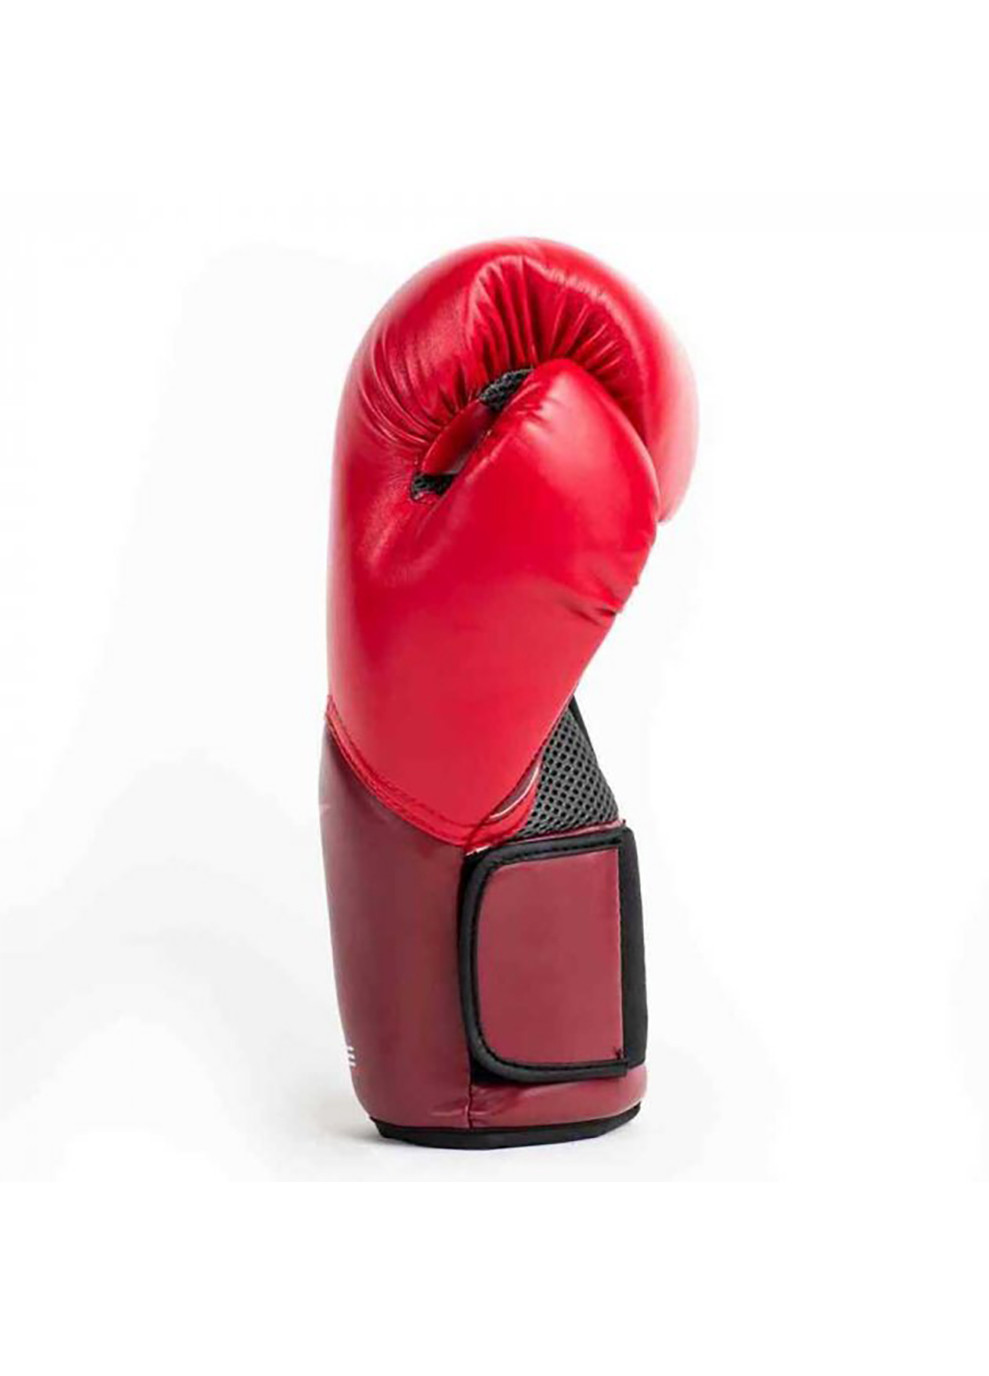 Боксерские перчатки Elite Training Gloves Красный огонь Everlast (260630284)